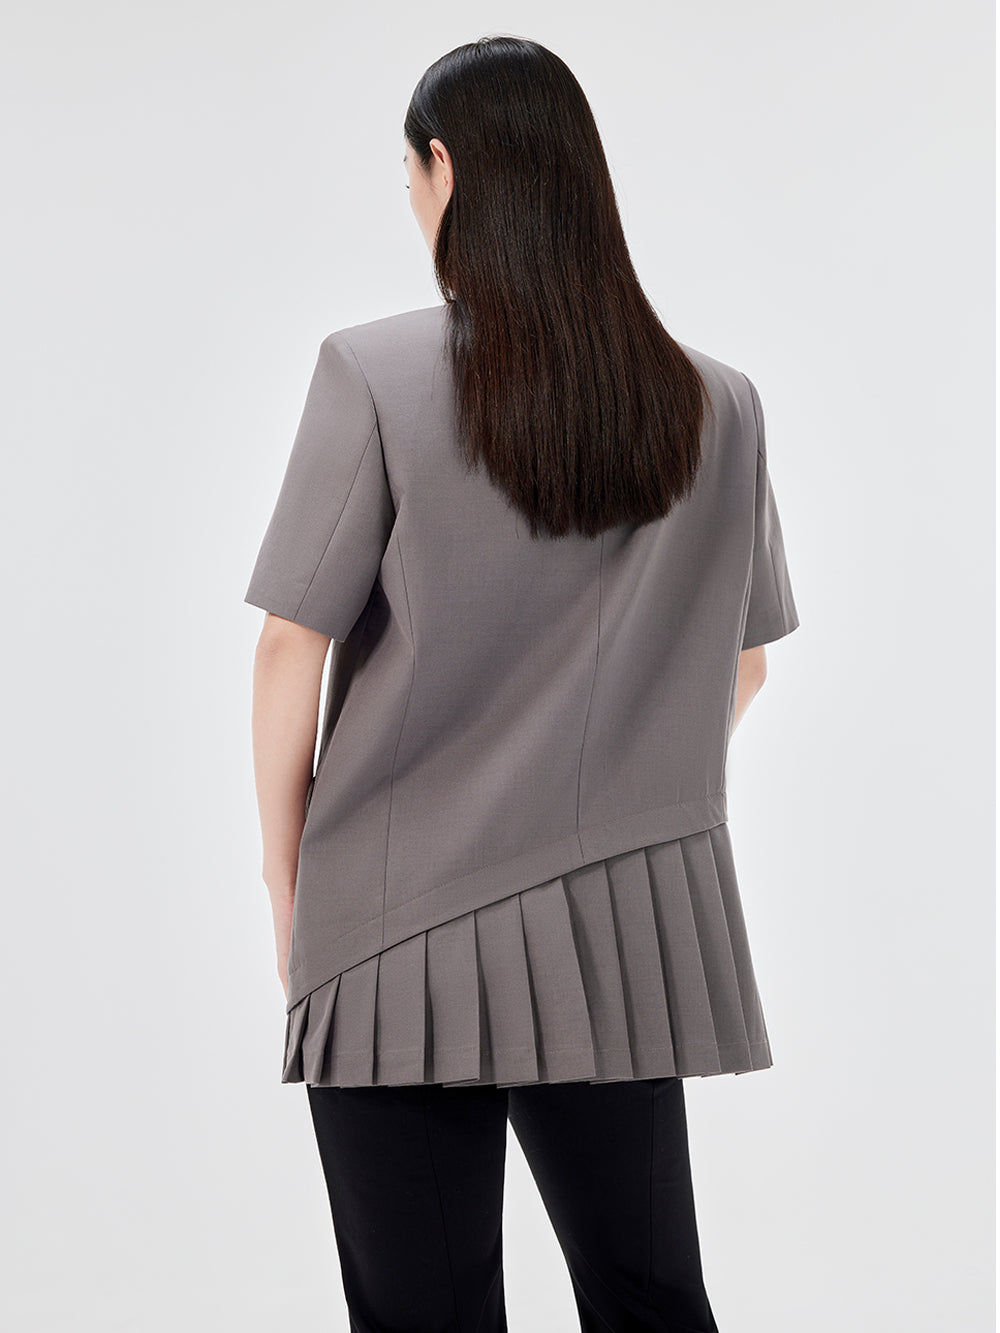 MUKZIN Chinese Style Stand Collar Skirt Design Short Sleeve Jacket